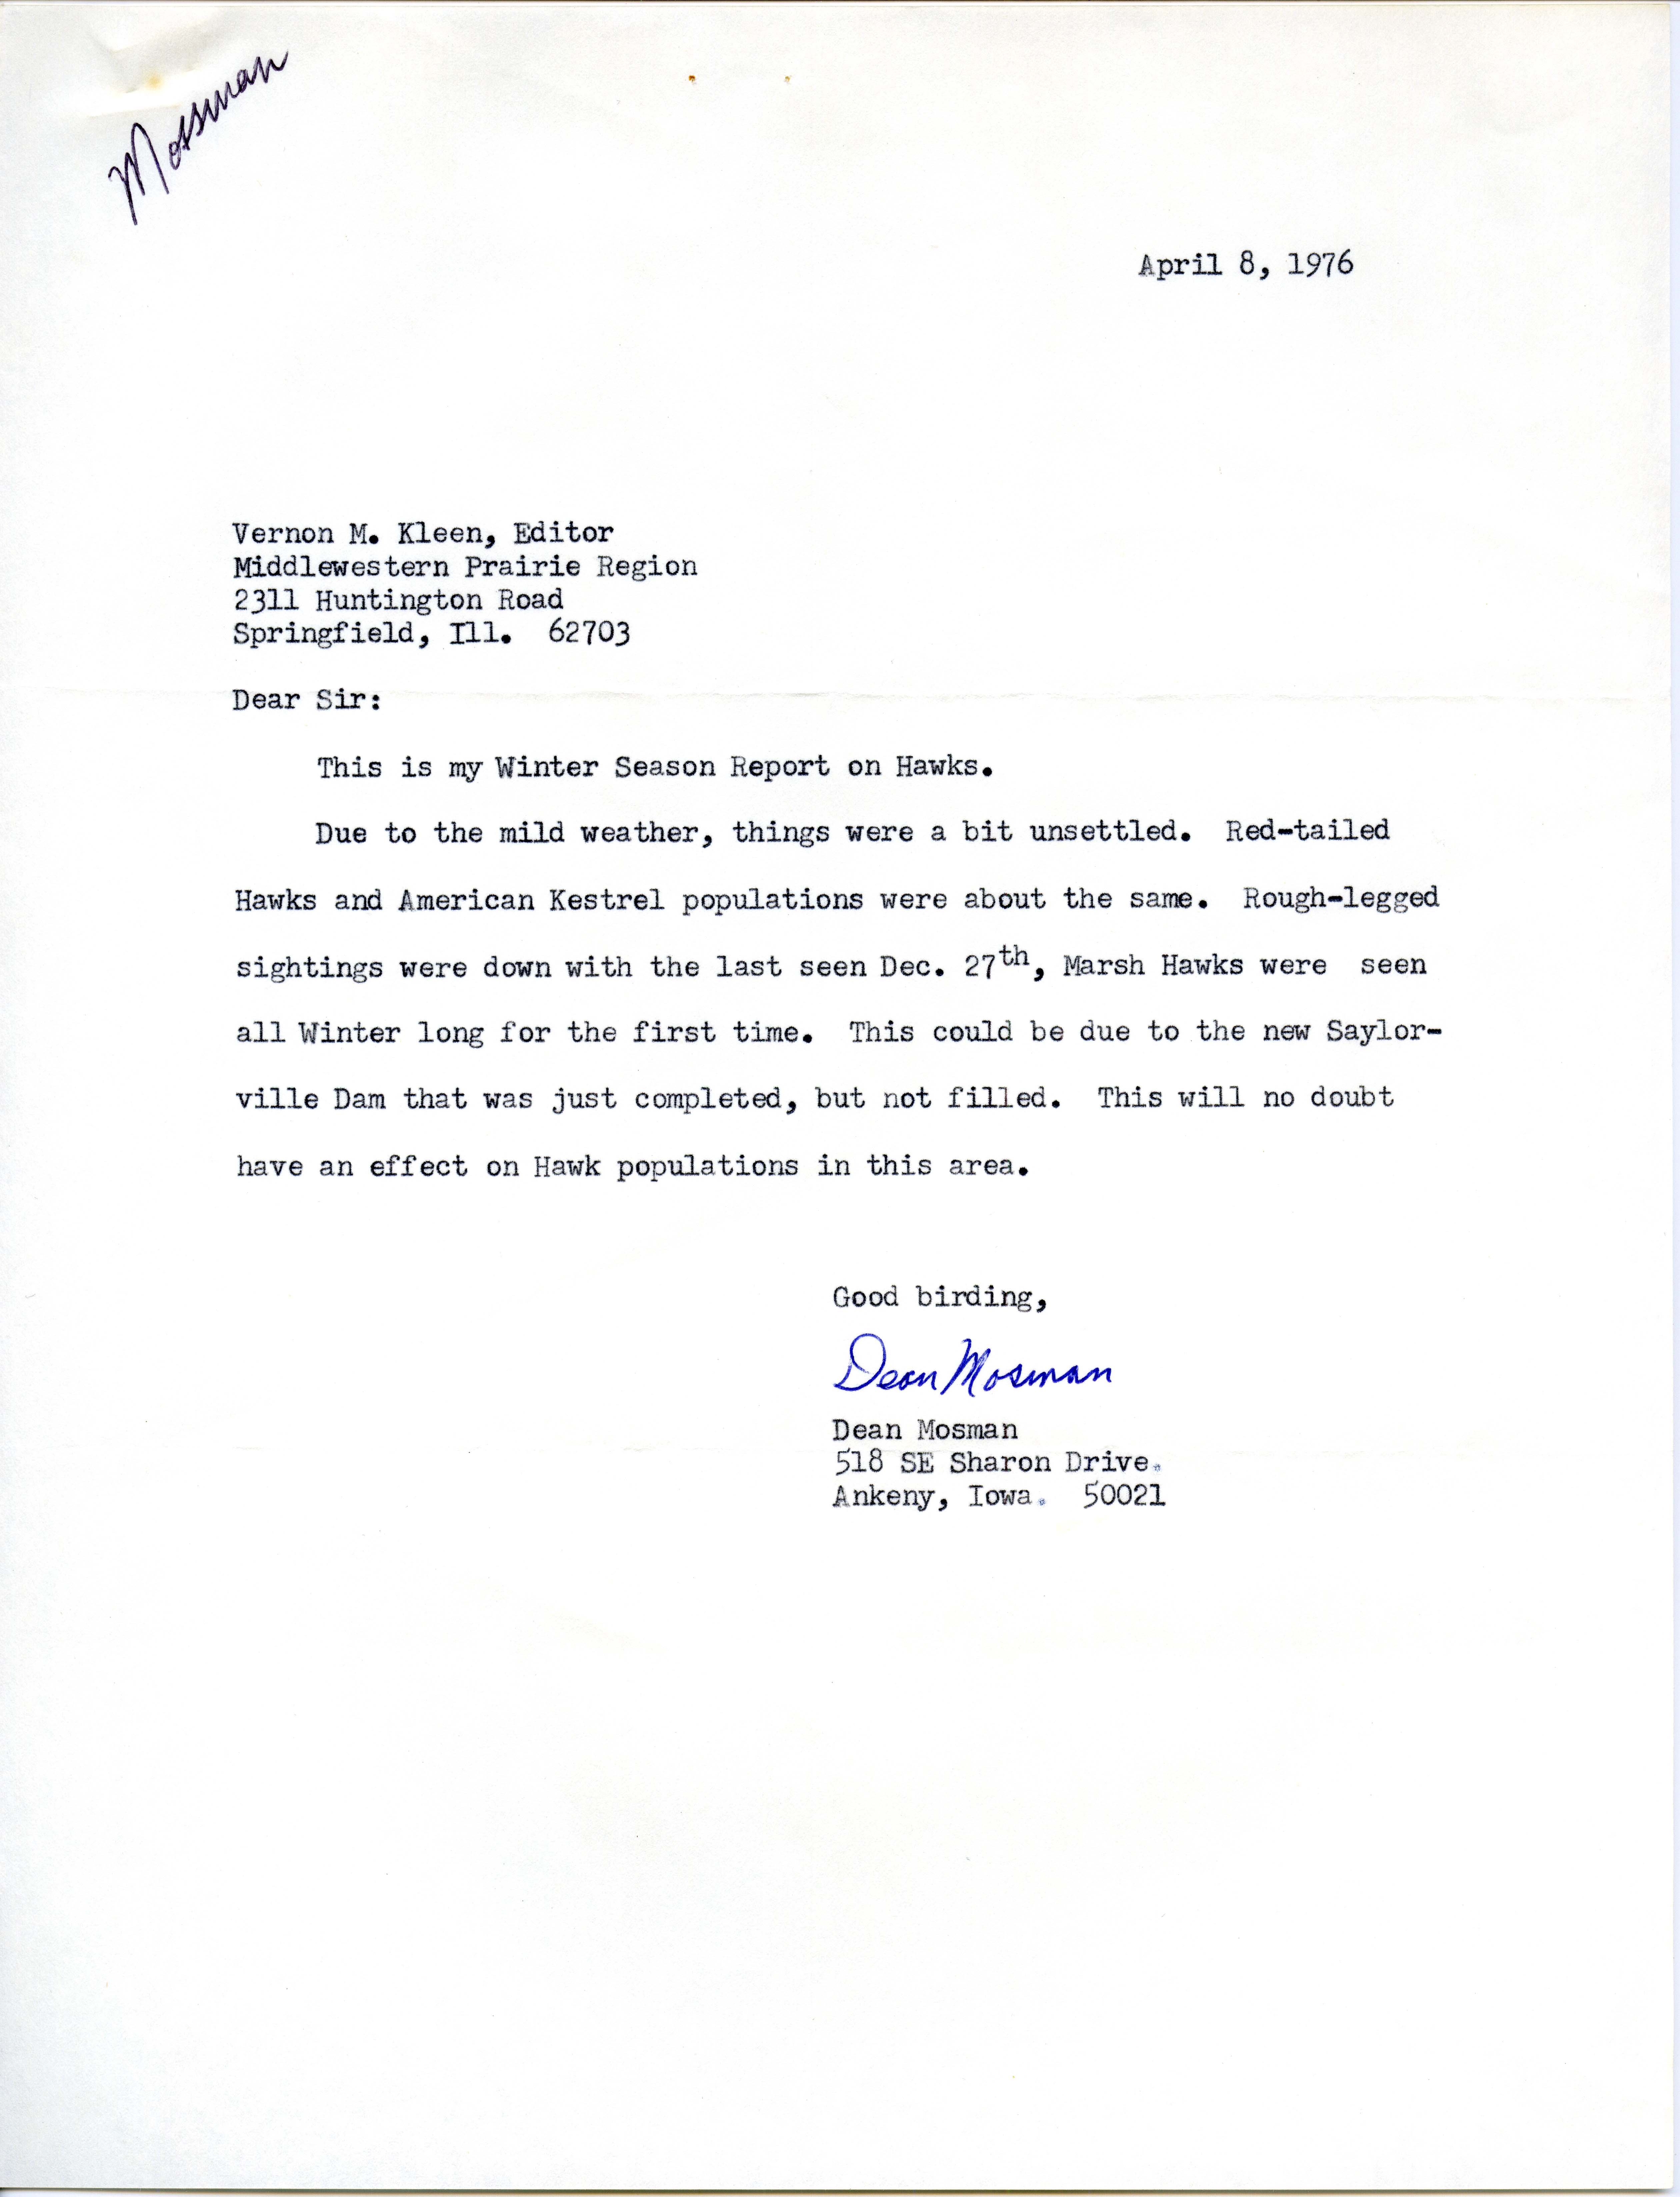 Dean Mosman letter to Vernon Kleen regarding hawks, April 8, 1976